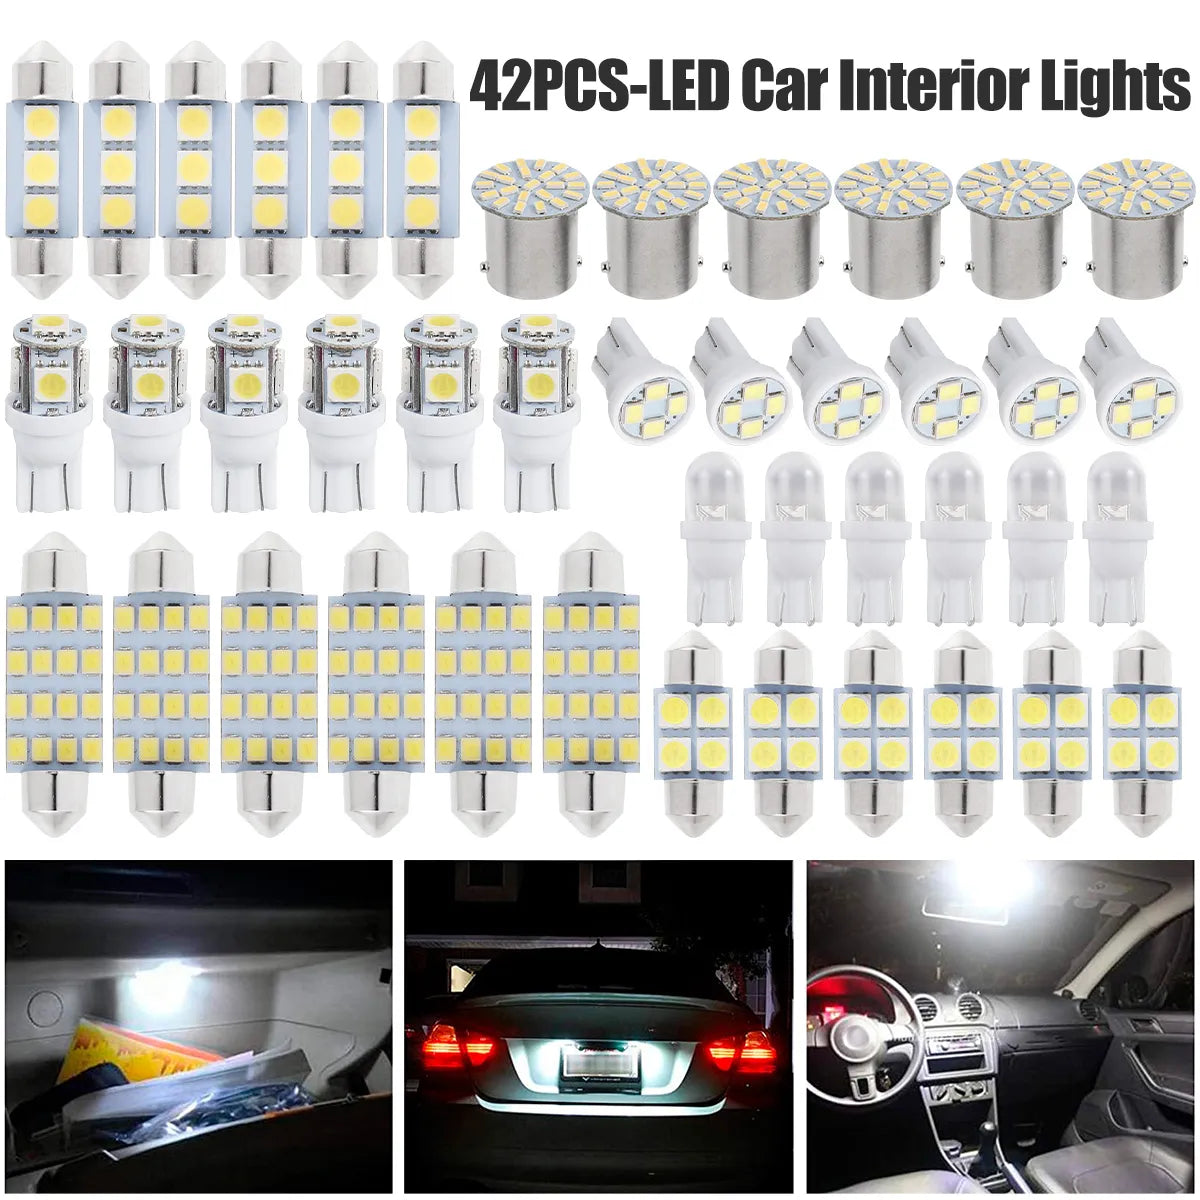 LED Car Interior Lights T10 Xenon White SMD Bulbs Set - Upgrade Your Car's Style  petlums.com   